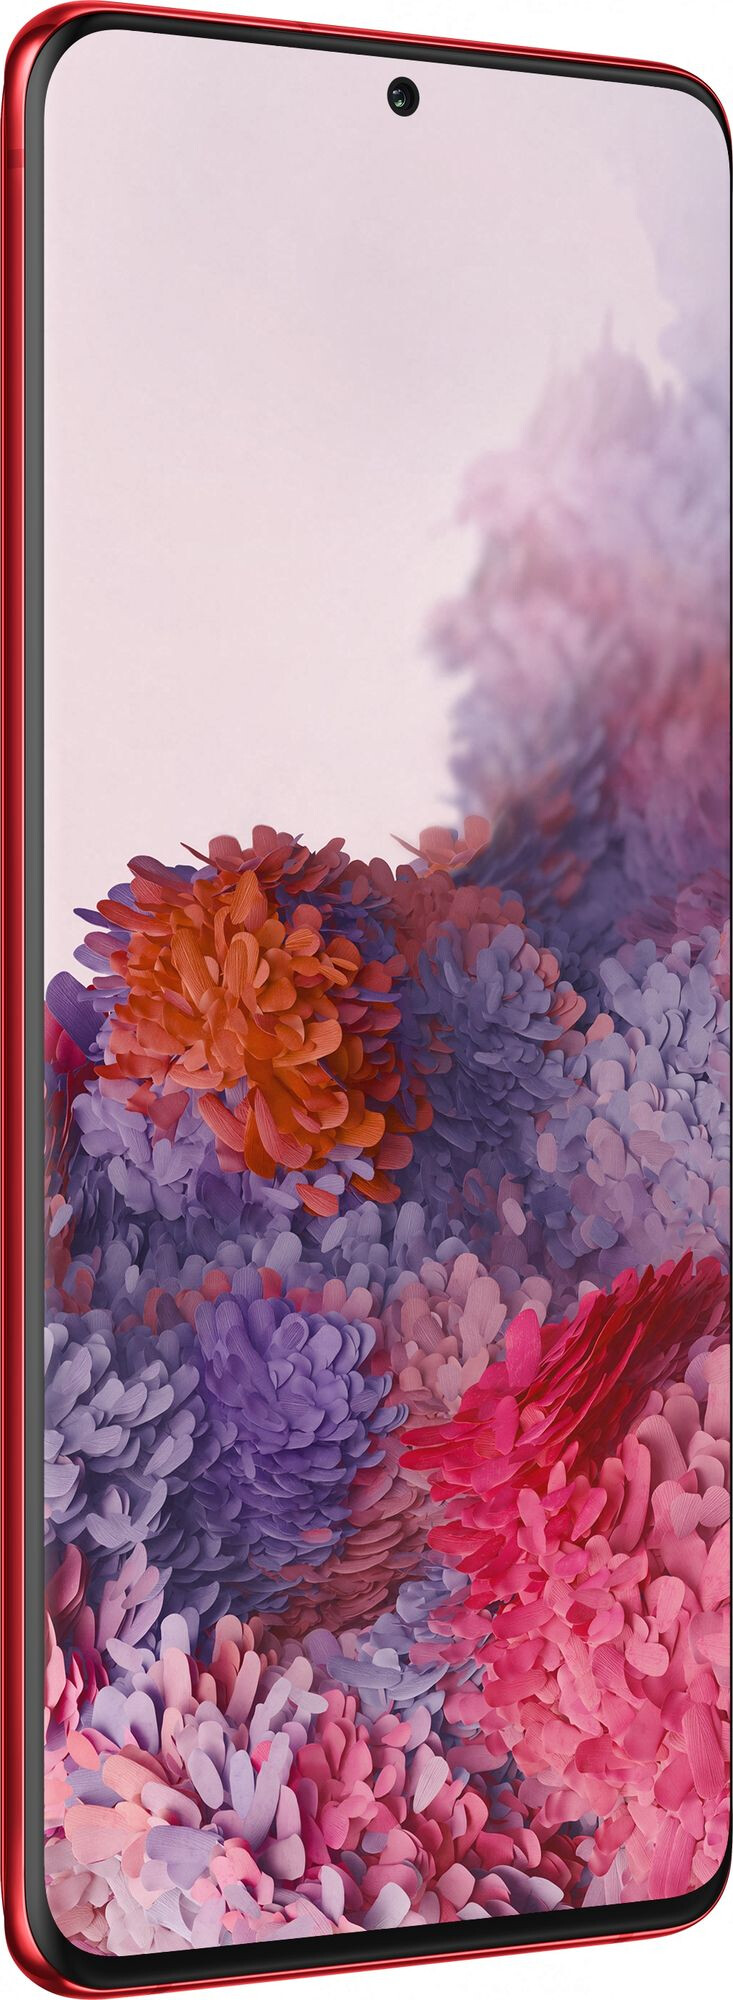 Смартфон Samsung Galaxy S20 Plus 8/128GB Red (Красный)